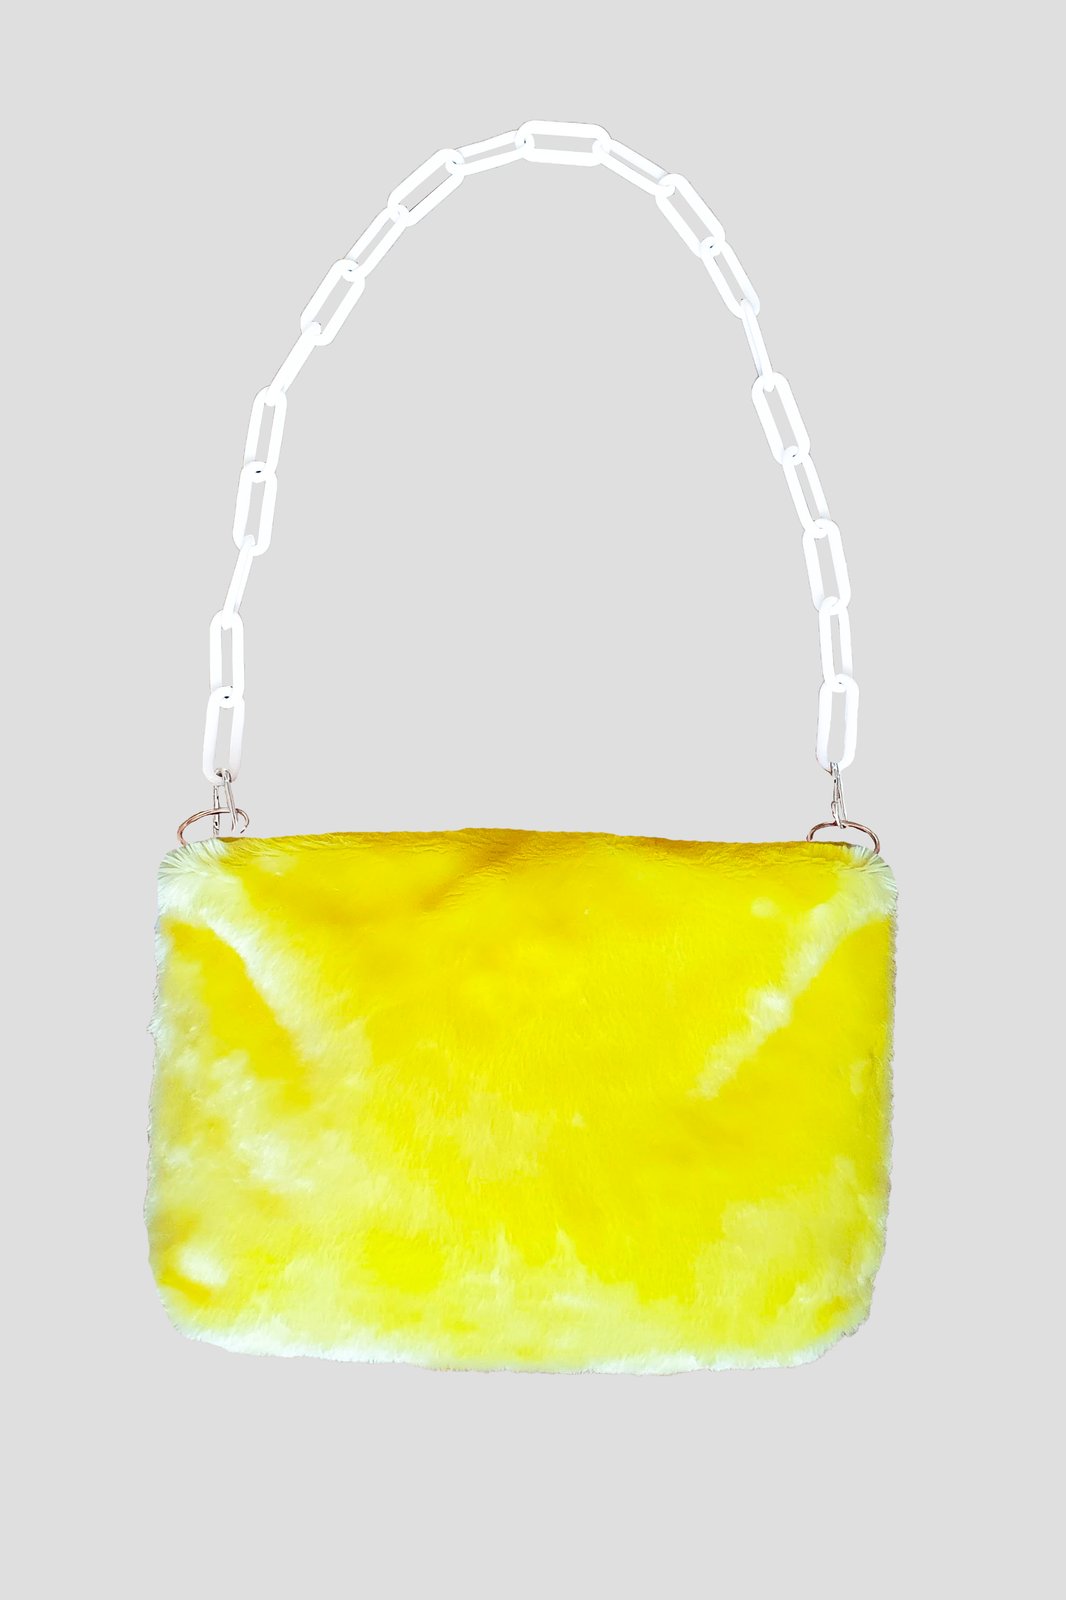 Buy Ladila Ladies, girls Purse Handbag Brown Hand-held Bag (Light Yellow)  at Amazon.in